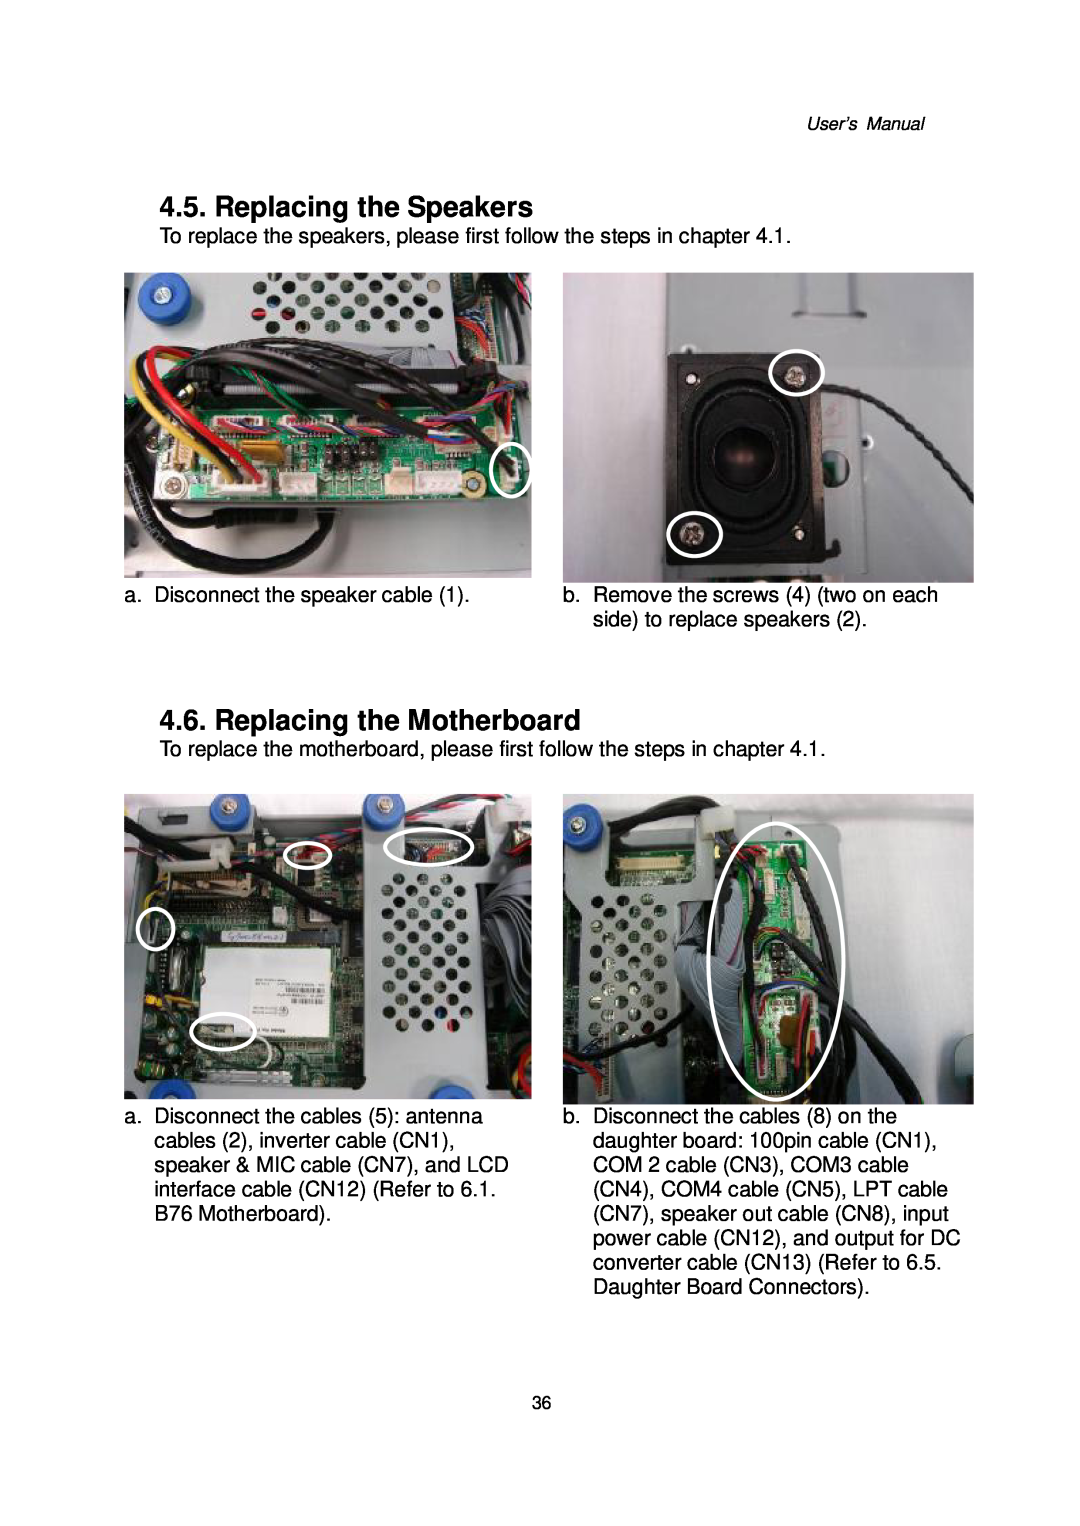 Intel 48201201, Kiosk Hardware System user manual Replacing the Speakers, Replacing the Motherboard 